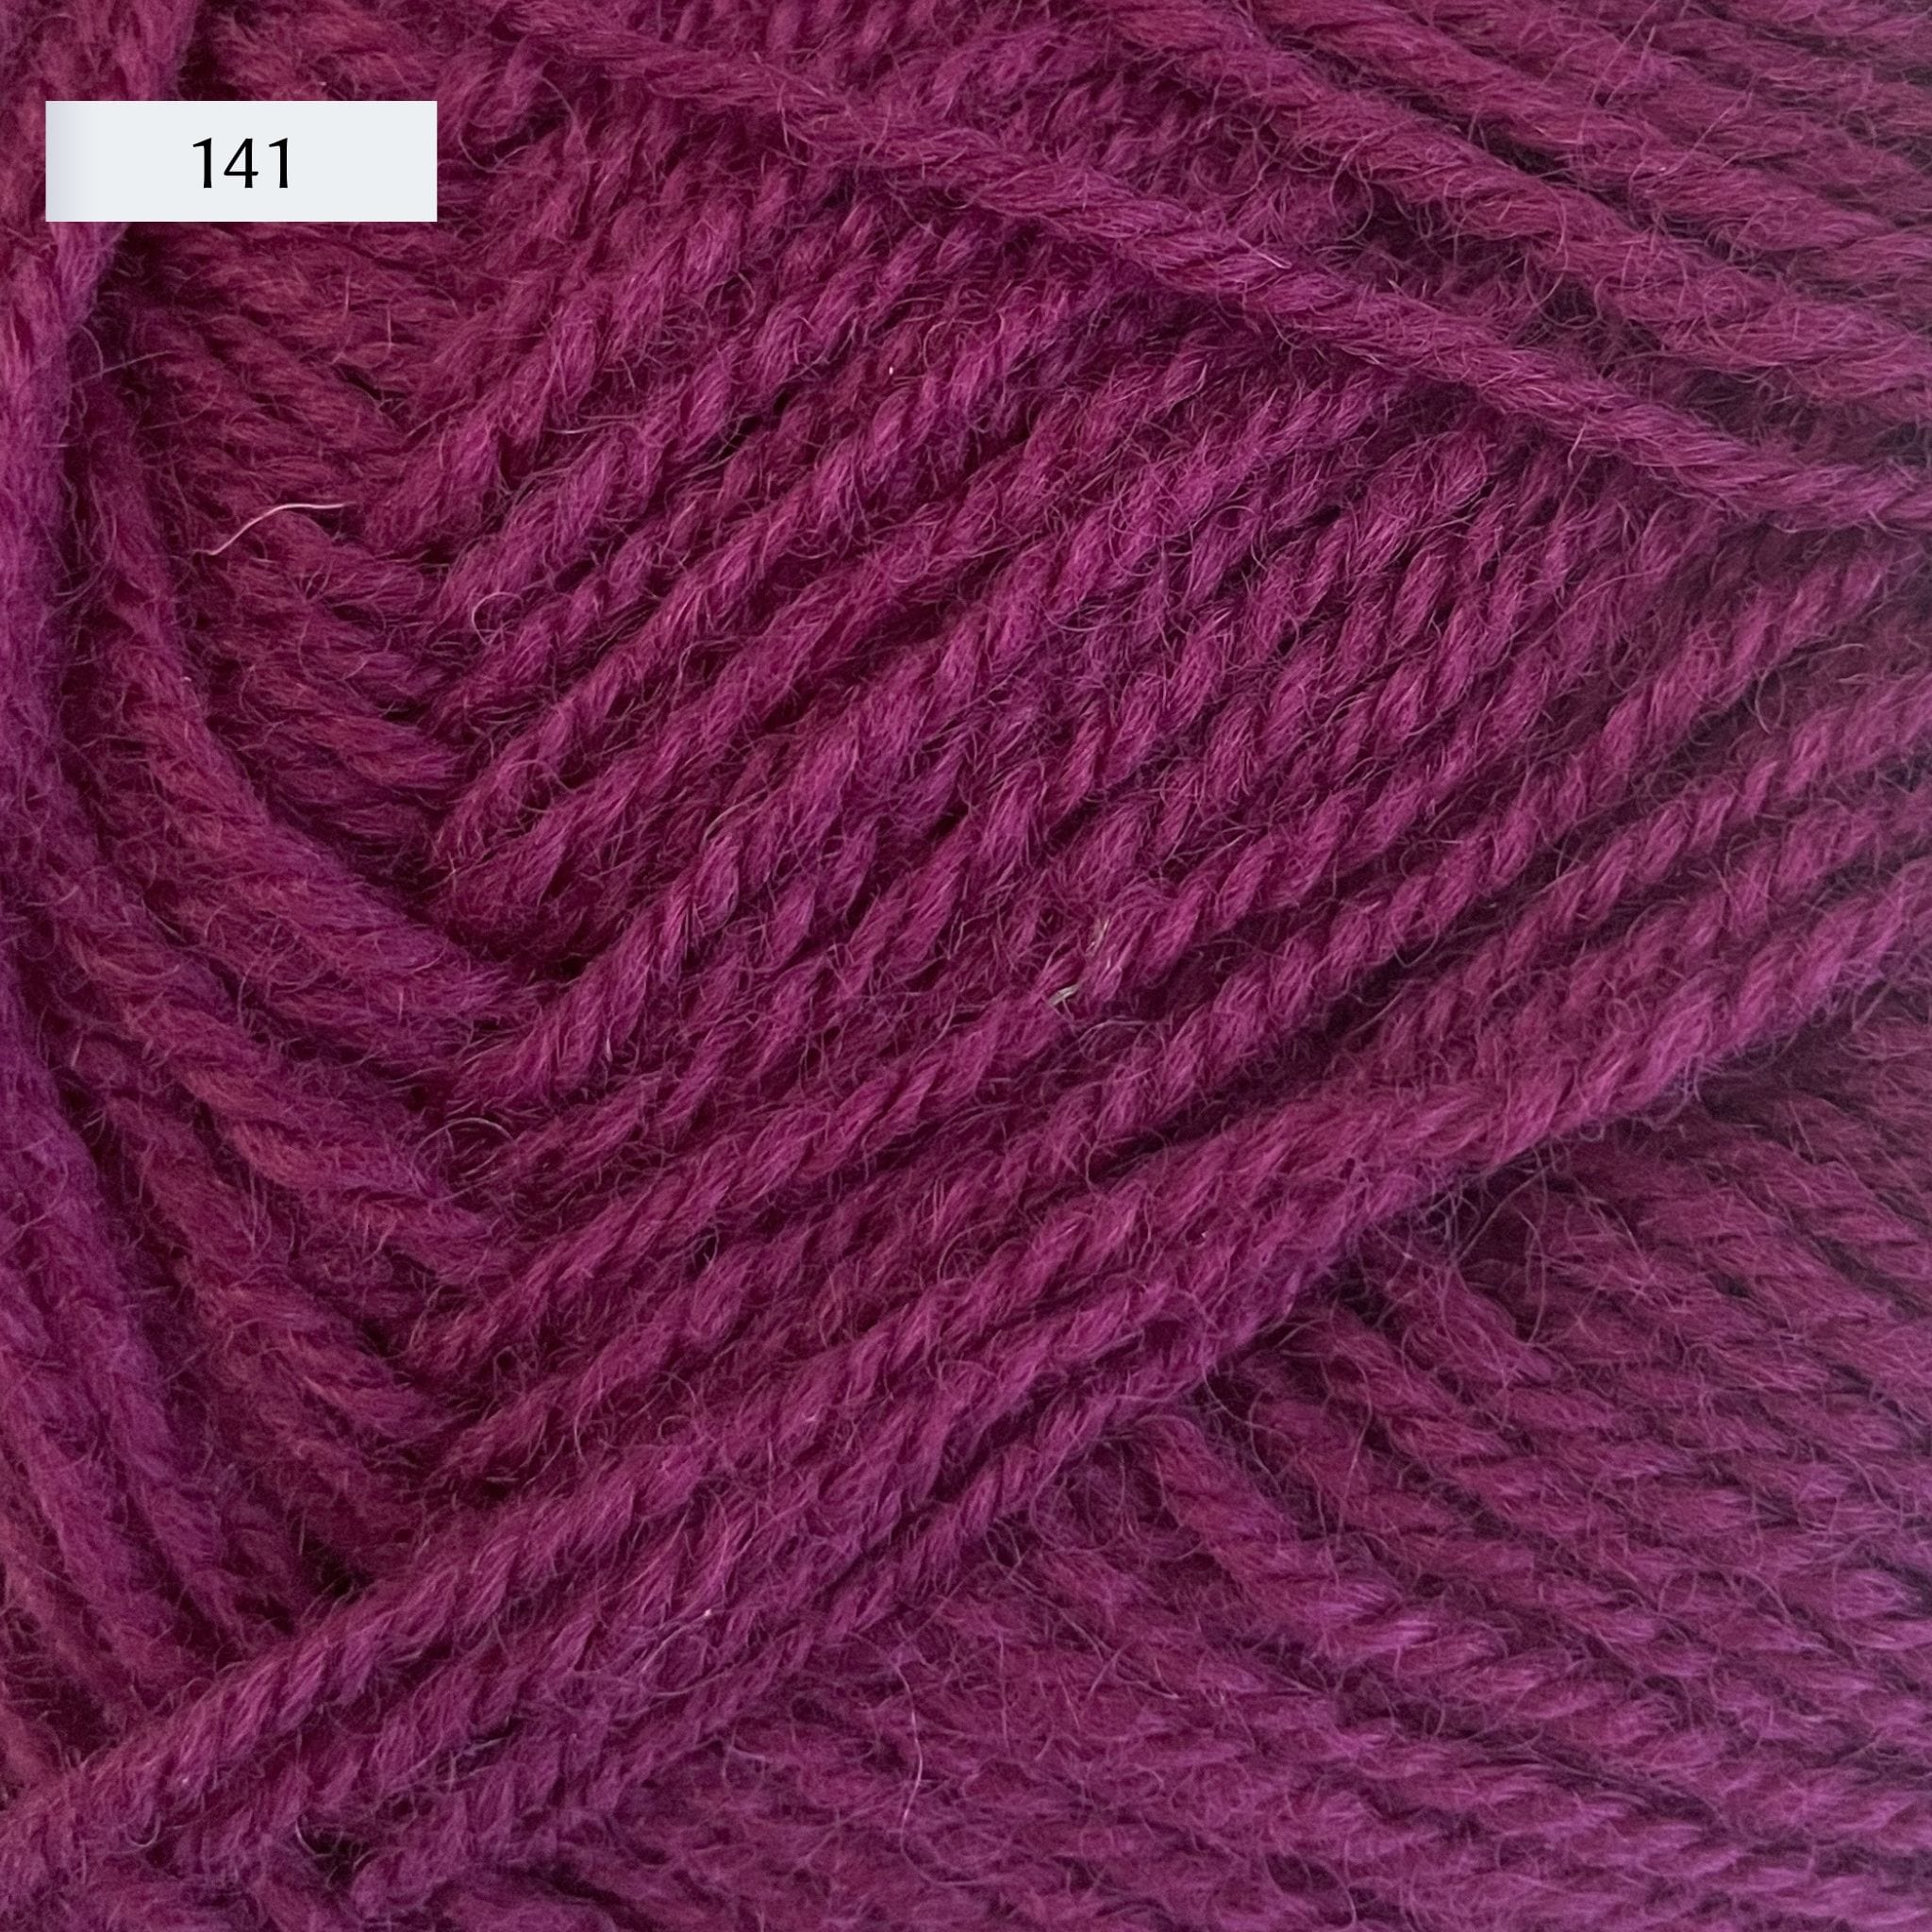 Rauma Strikkegarn, DK weight yarn, in color 141, mid-tone magenta